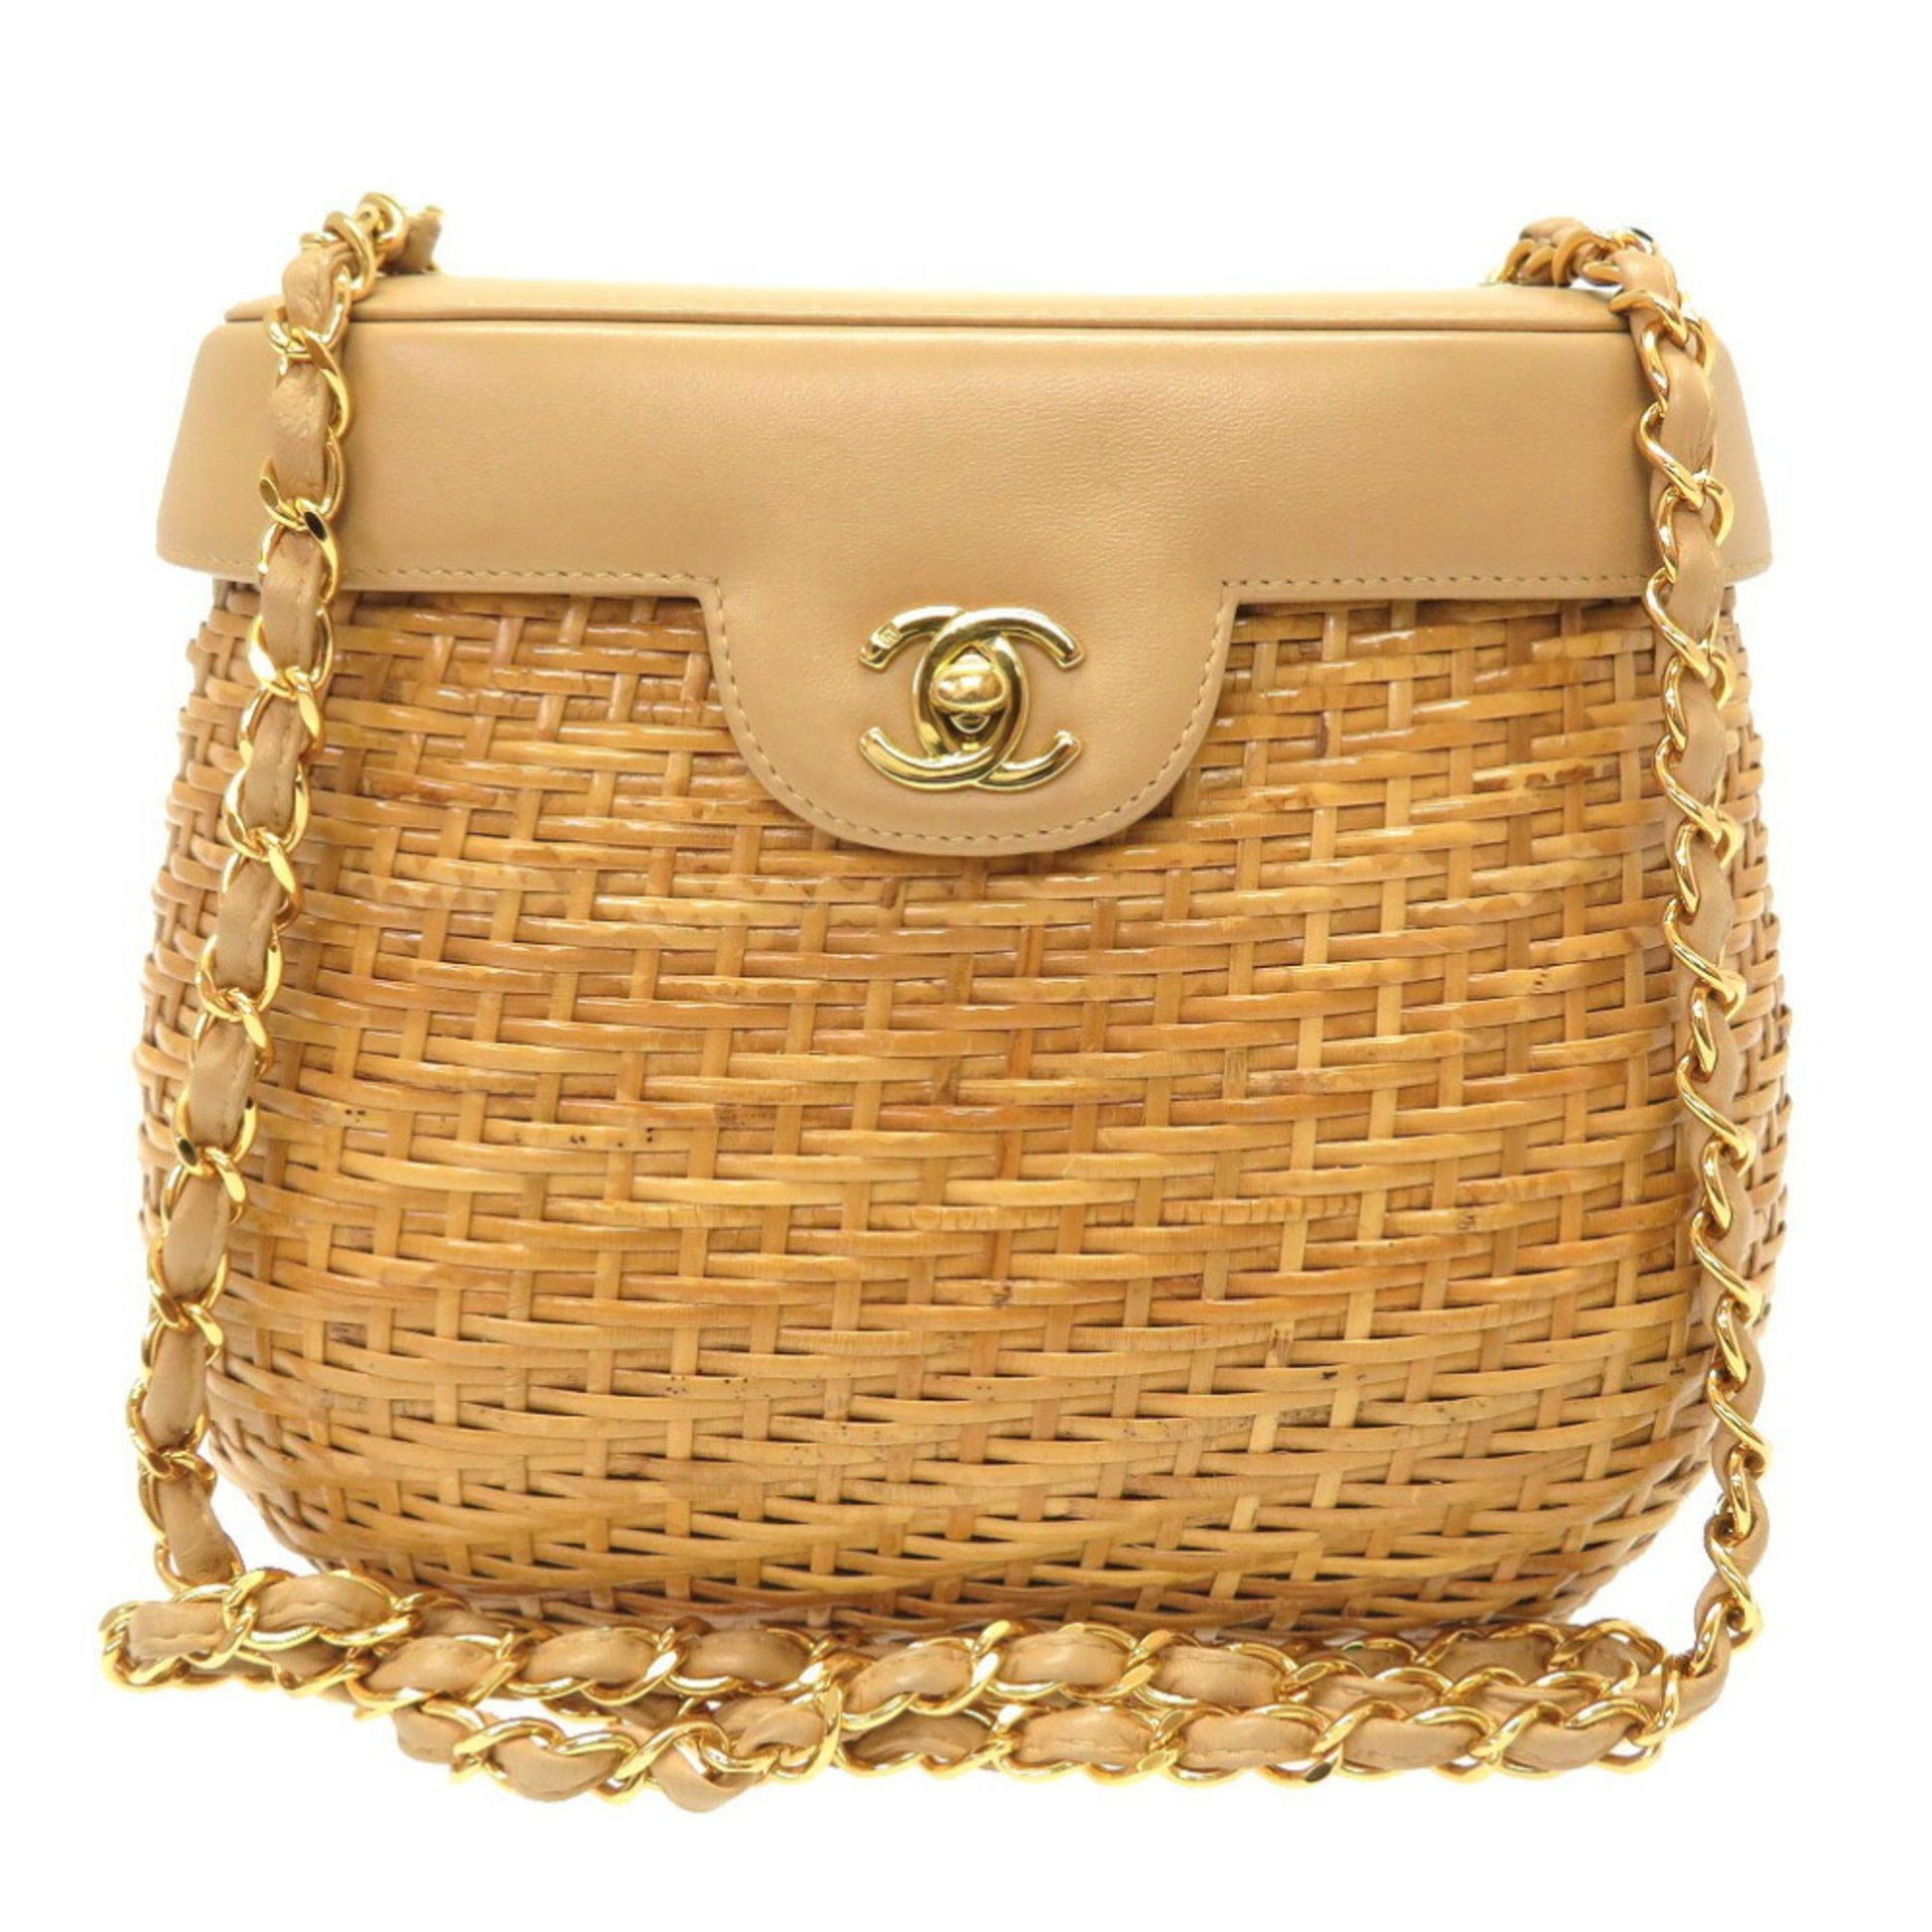 Chanel basket bag straw leather beige 5th series Coco mark turn